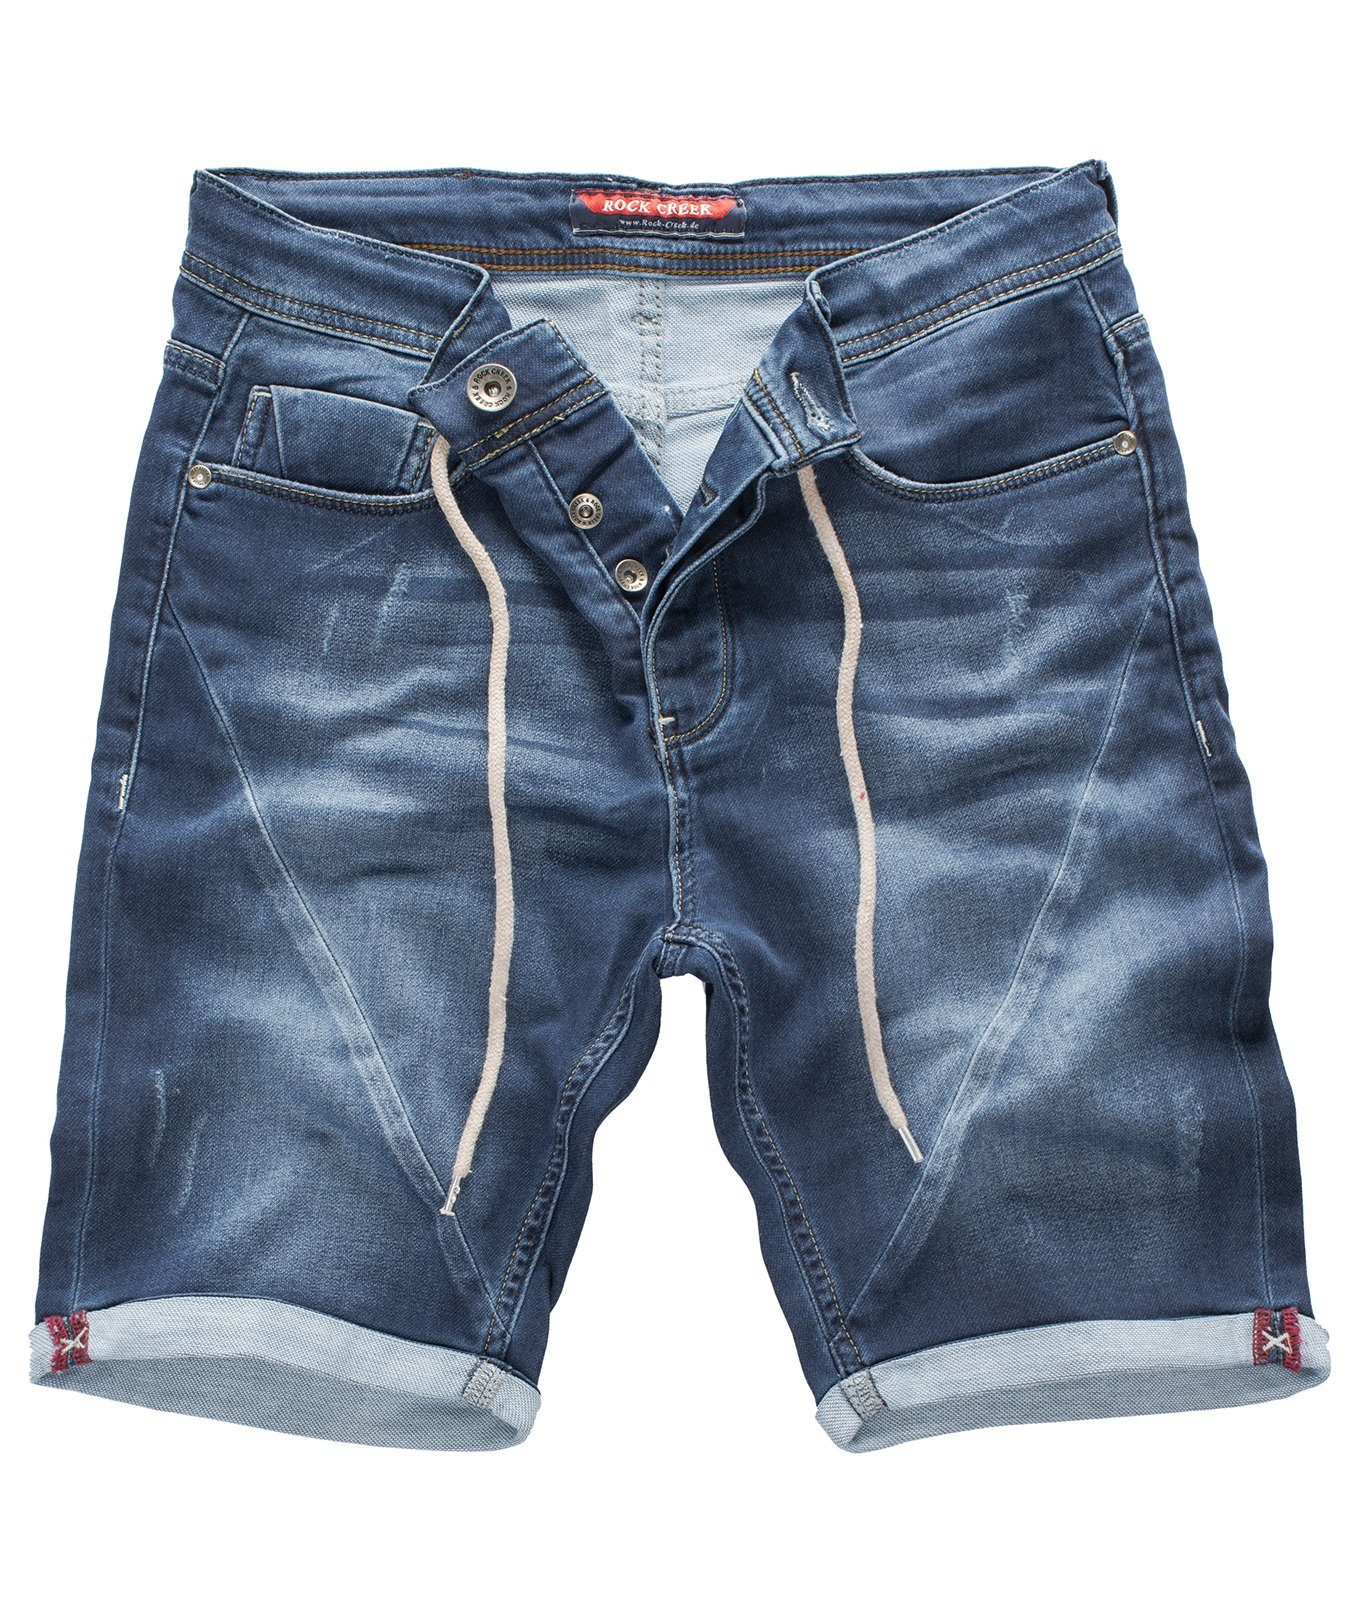 Rock Creek Jeansshorts Herren Sweat Shorts Jeans Shorts RC-2200 Royalblau